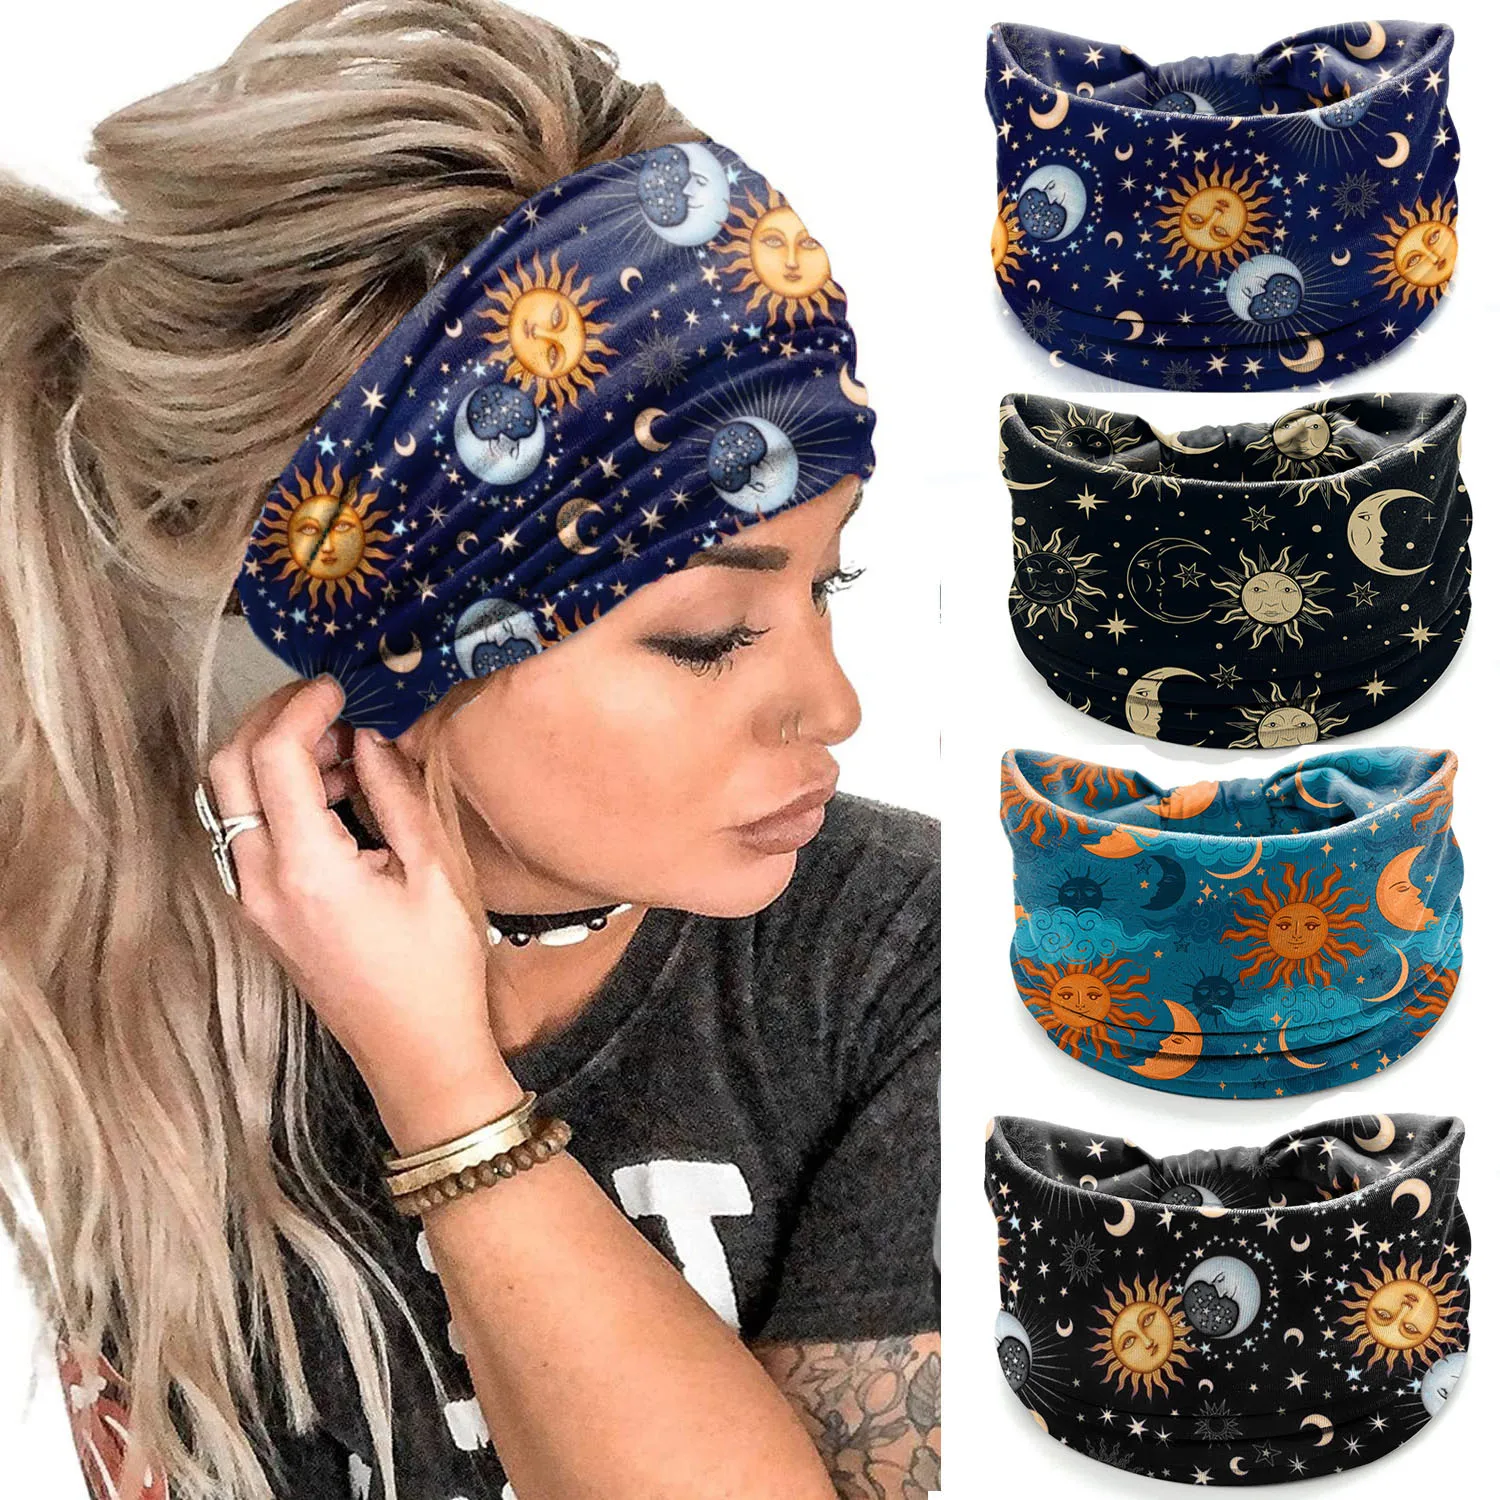 

Boho Cotton Wide Headband For Women Starry Sky Moon Print Turban Headwrap Knot Hairband Bandana Girls Hair Accessories